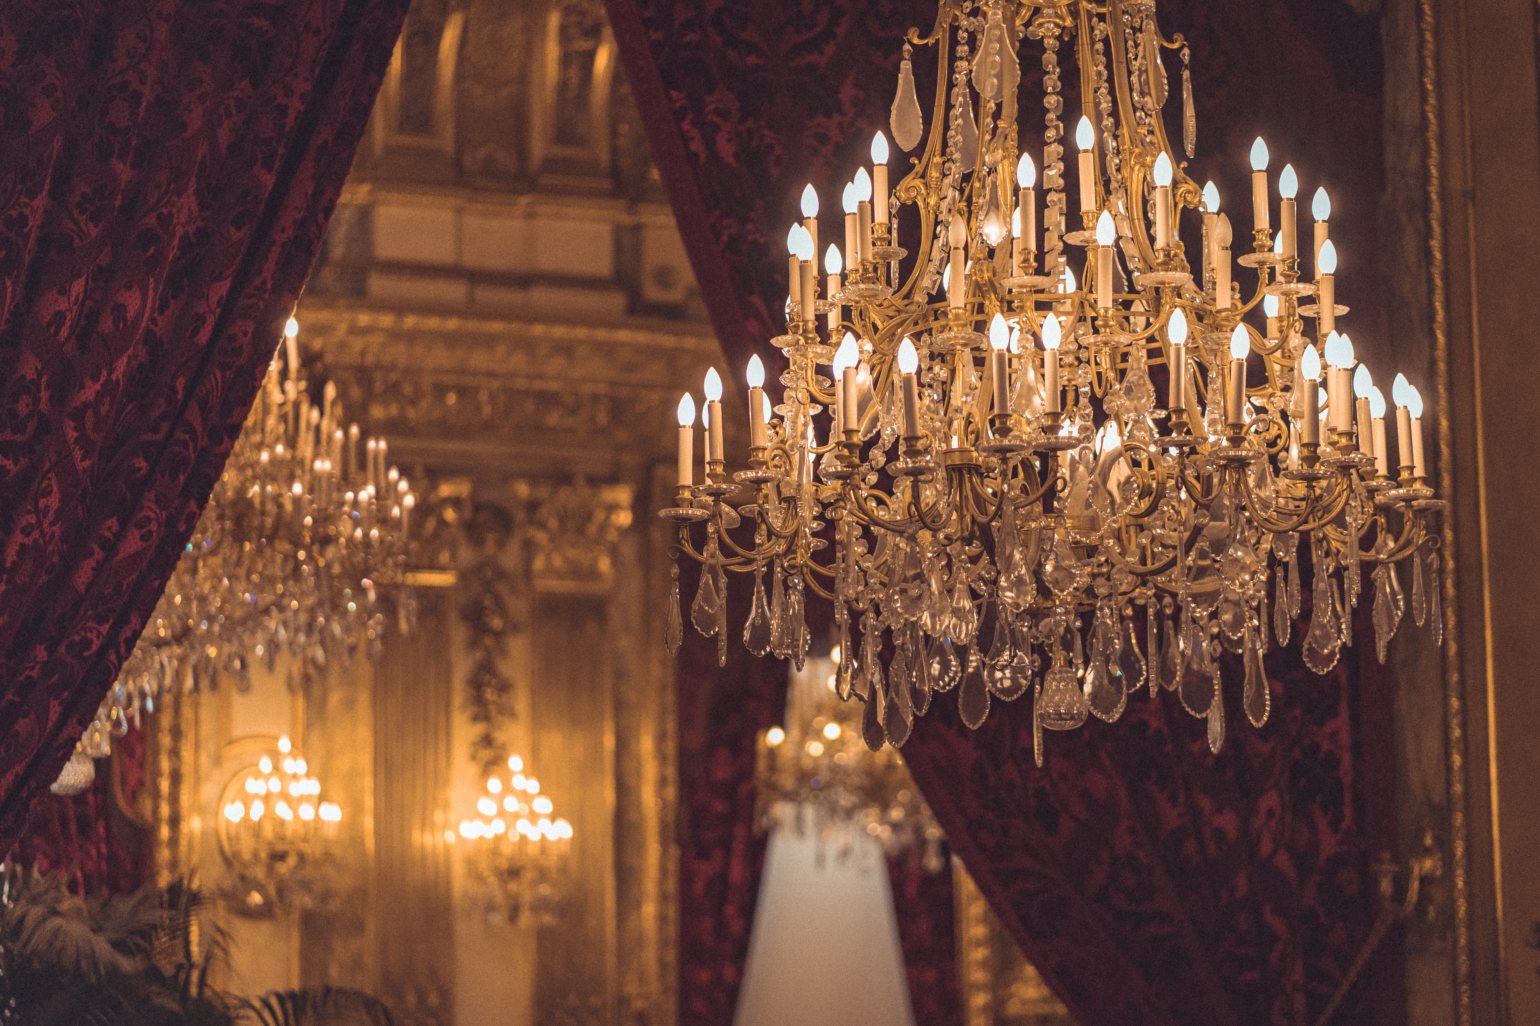 Royalcore antique chandeliers